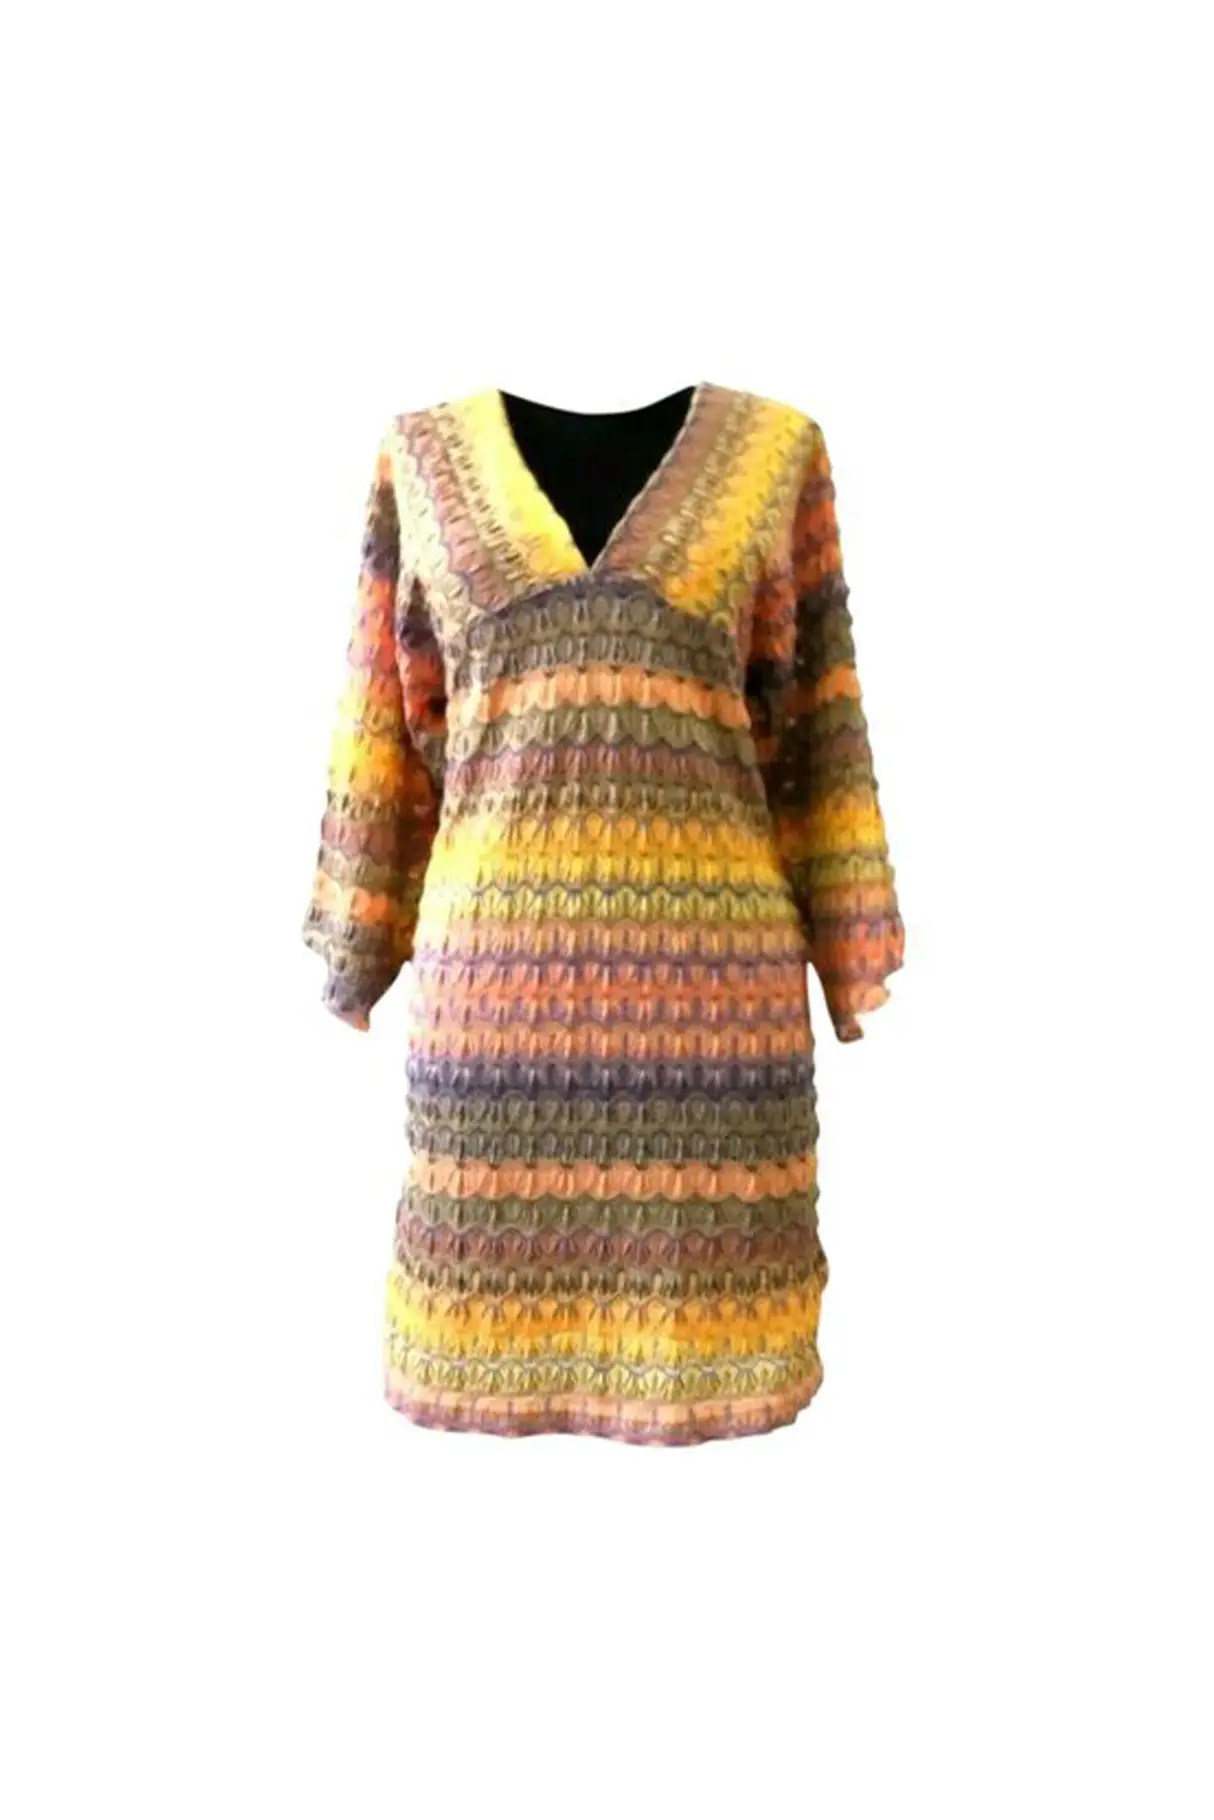 multicolored-synthetic-supertrash-dress.jpg